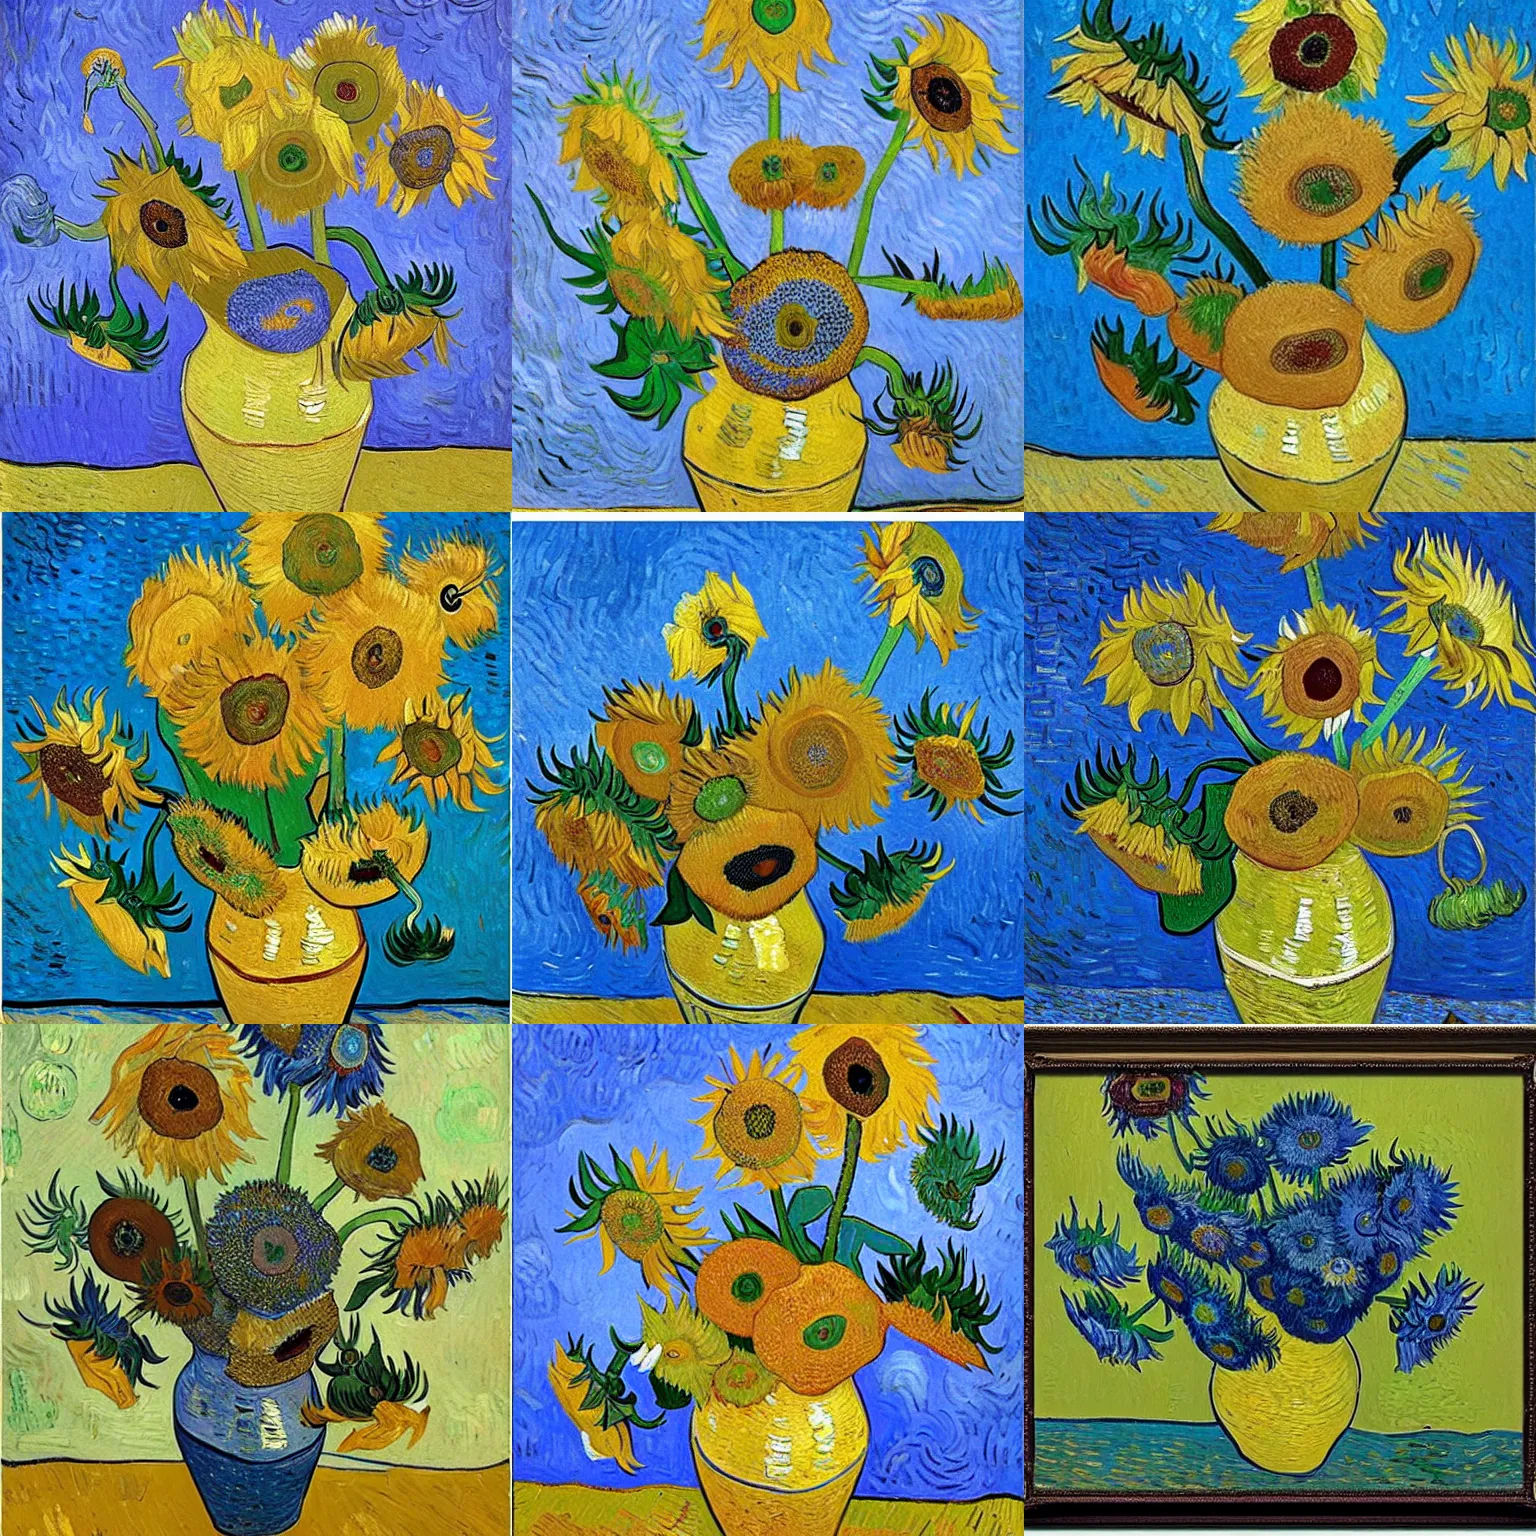 Prompt: van gogh blue sunflowers